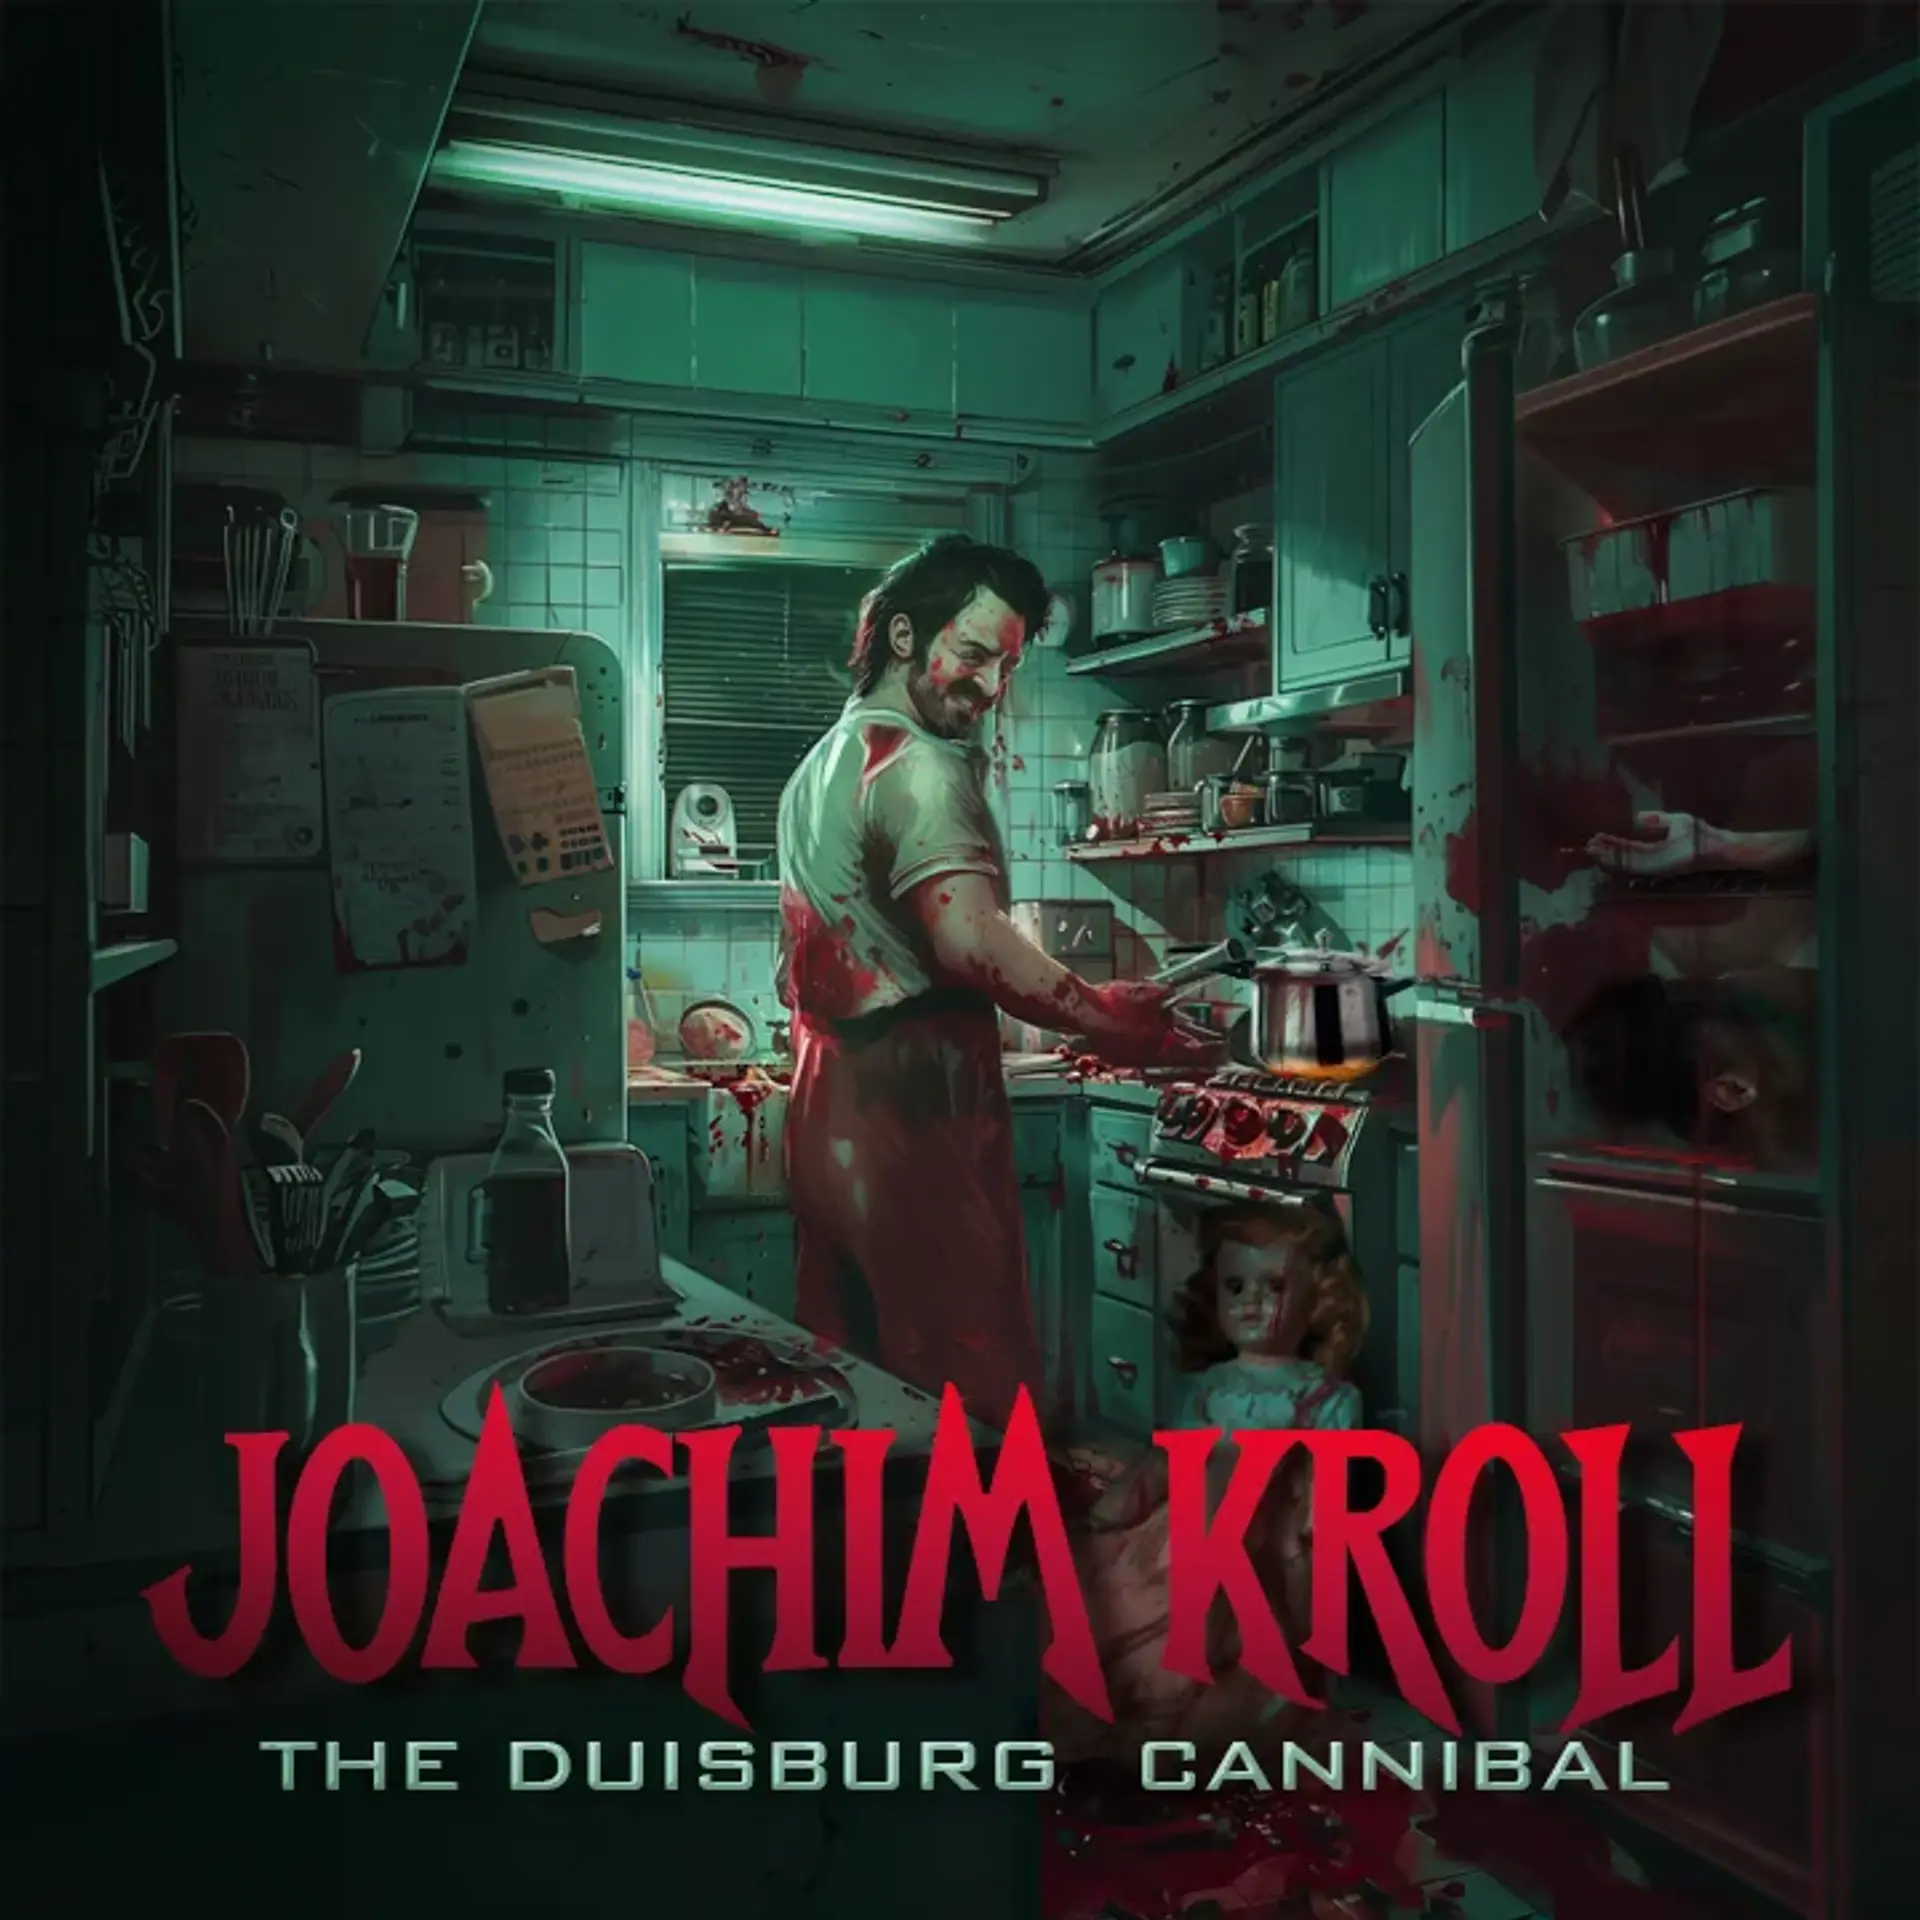 Joachim kroll- The Duisburg Cannibal | 